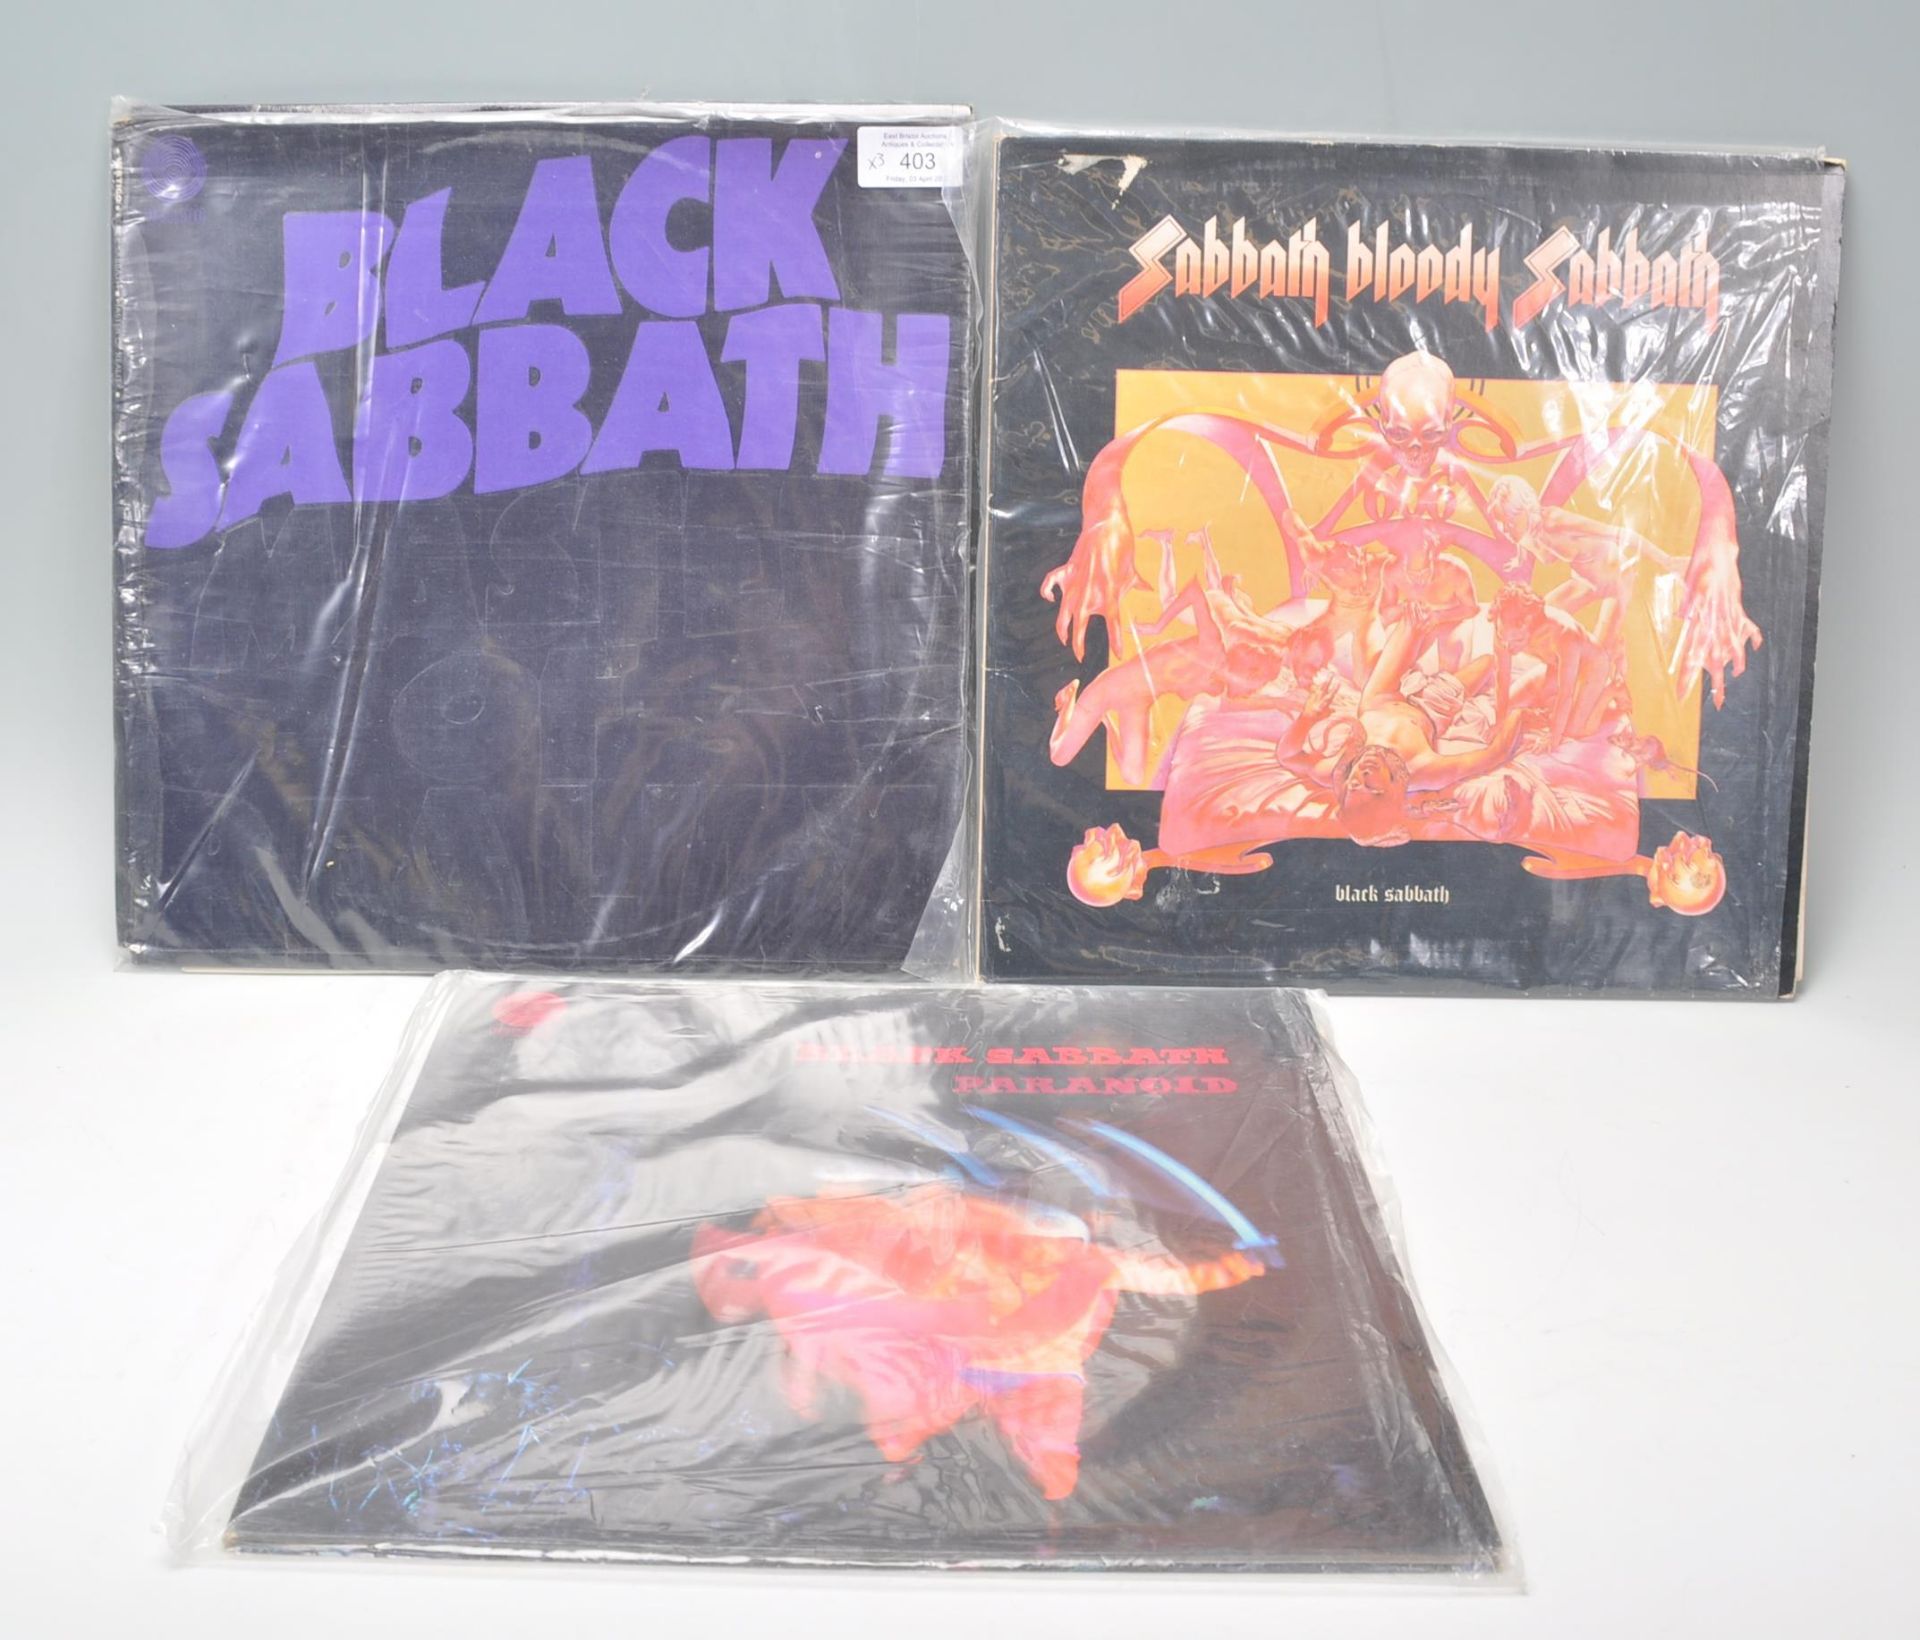 A group of three Vinyl Long Play LP Record albums by Black Sabbath to include Paranoid on Vertigo,